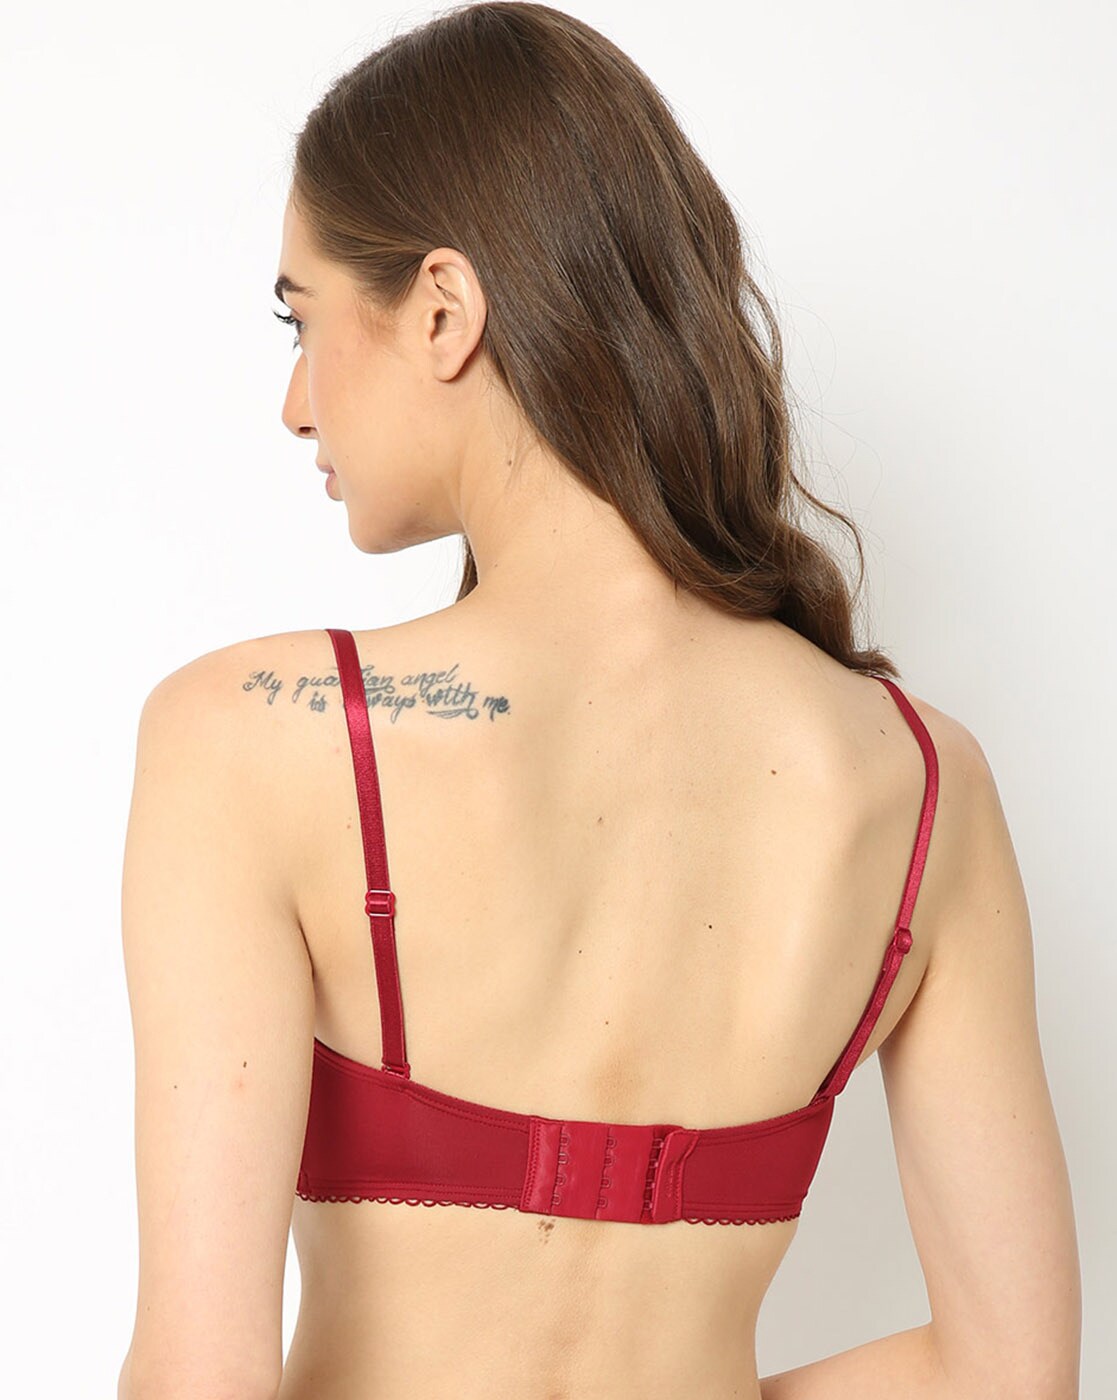 Buy RED Bras for Women by Enamor Online